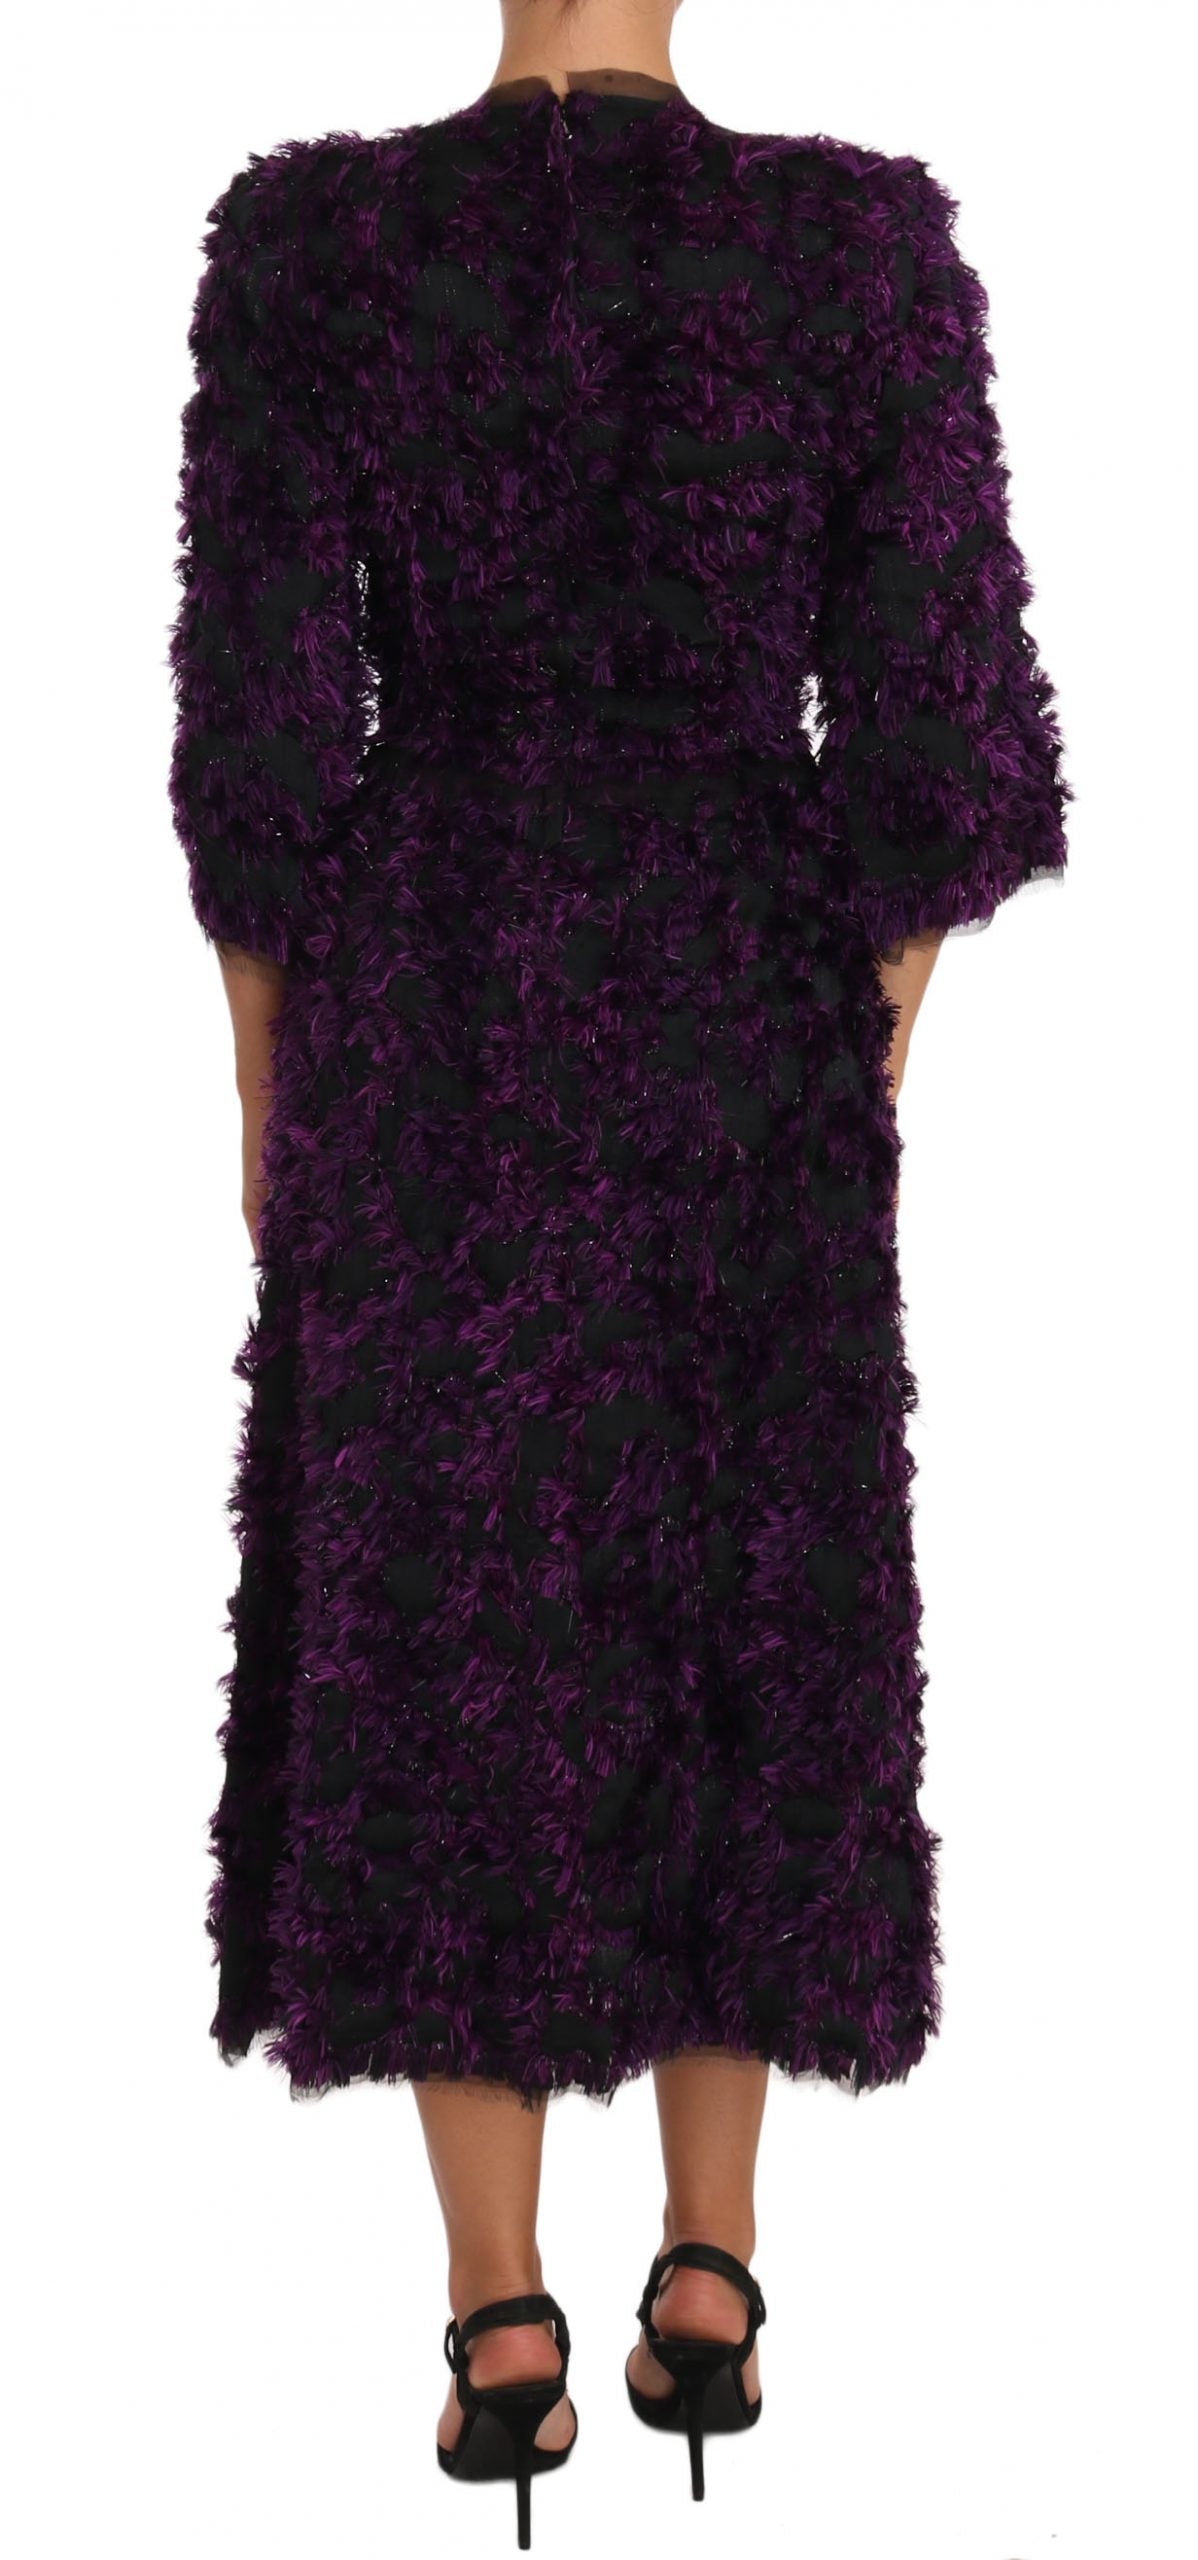 Elegant Fringe Sheath Dress in Purple & Black